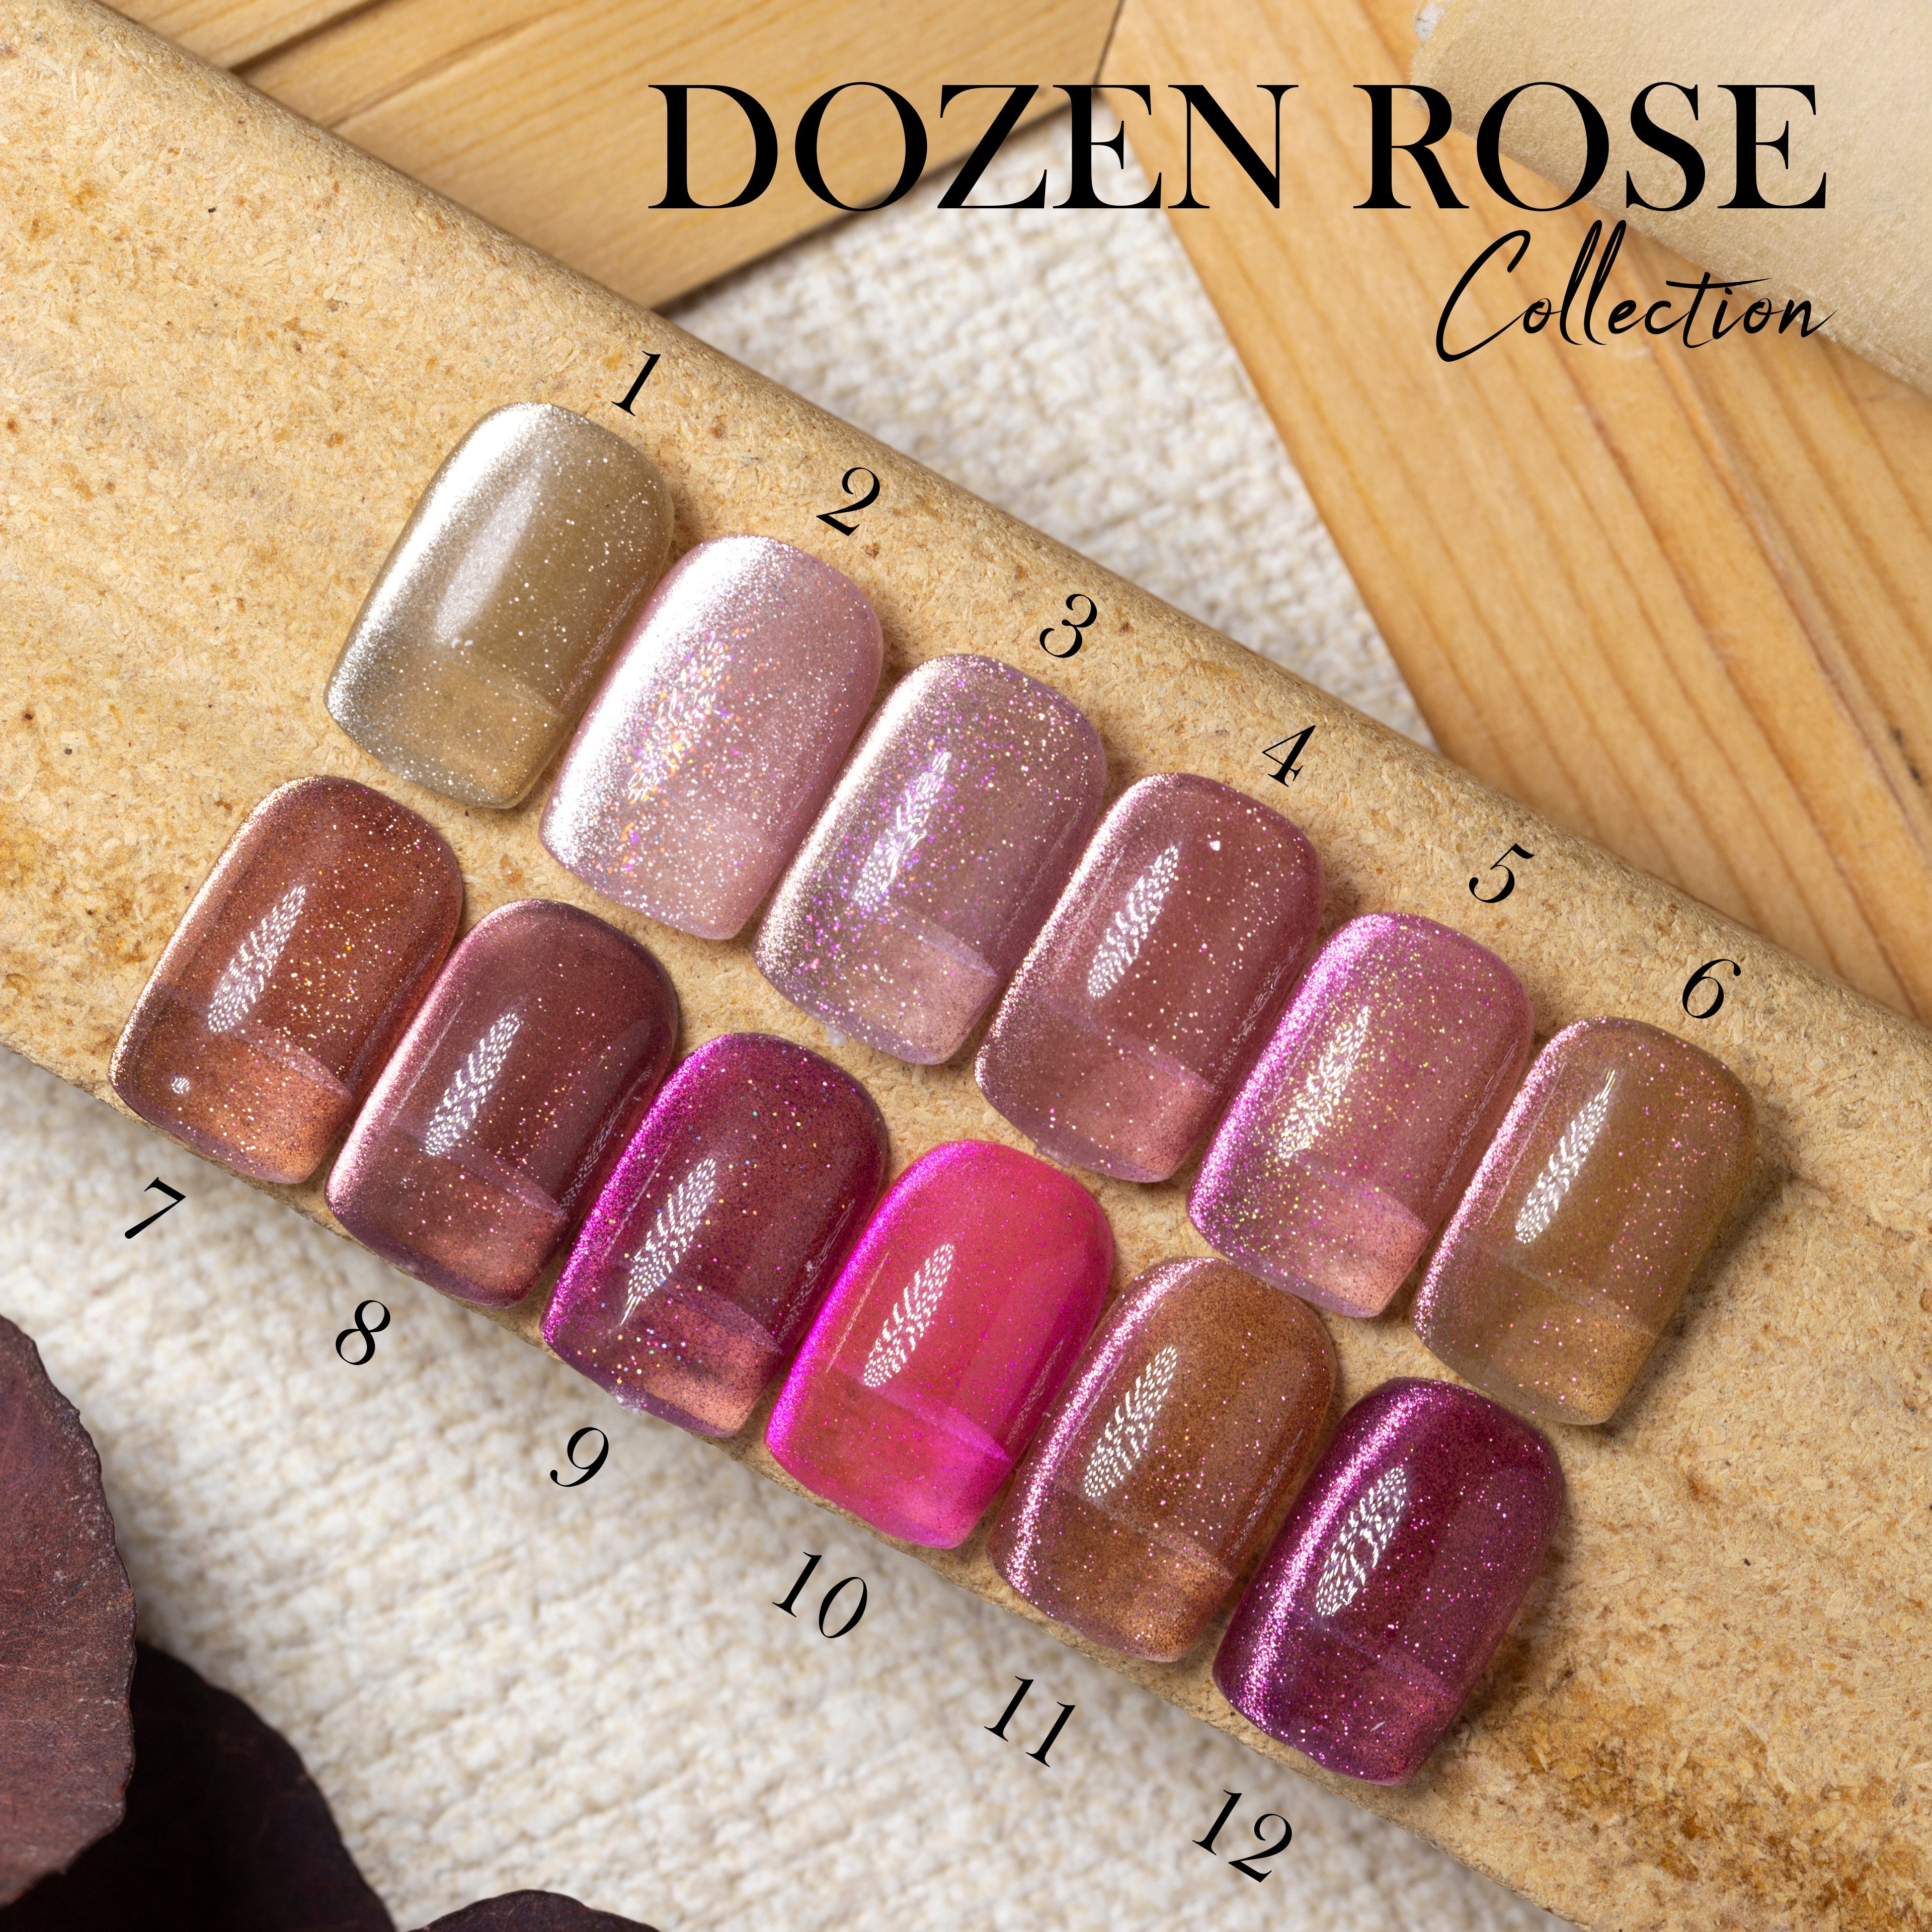 LDS DR02 - Gel Polish 0.5 oz - Dozen Rose Collection